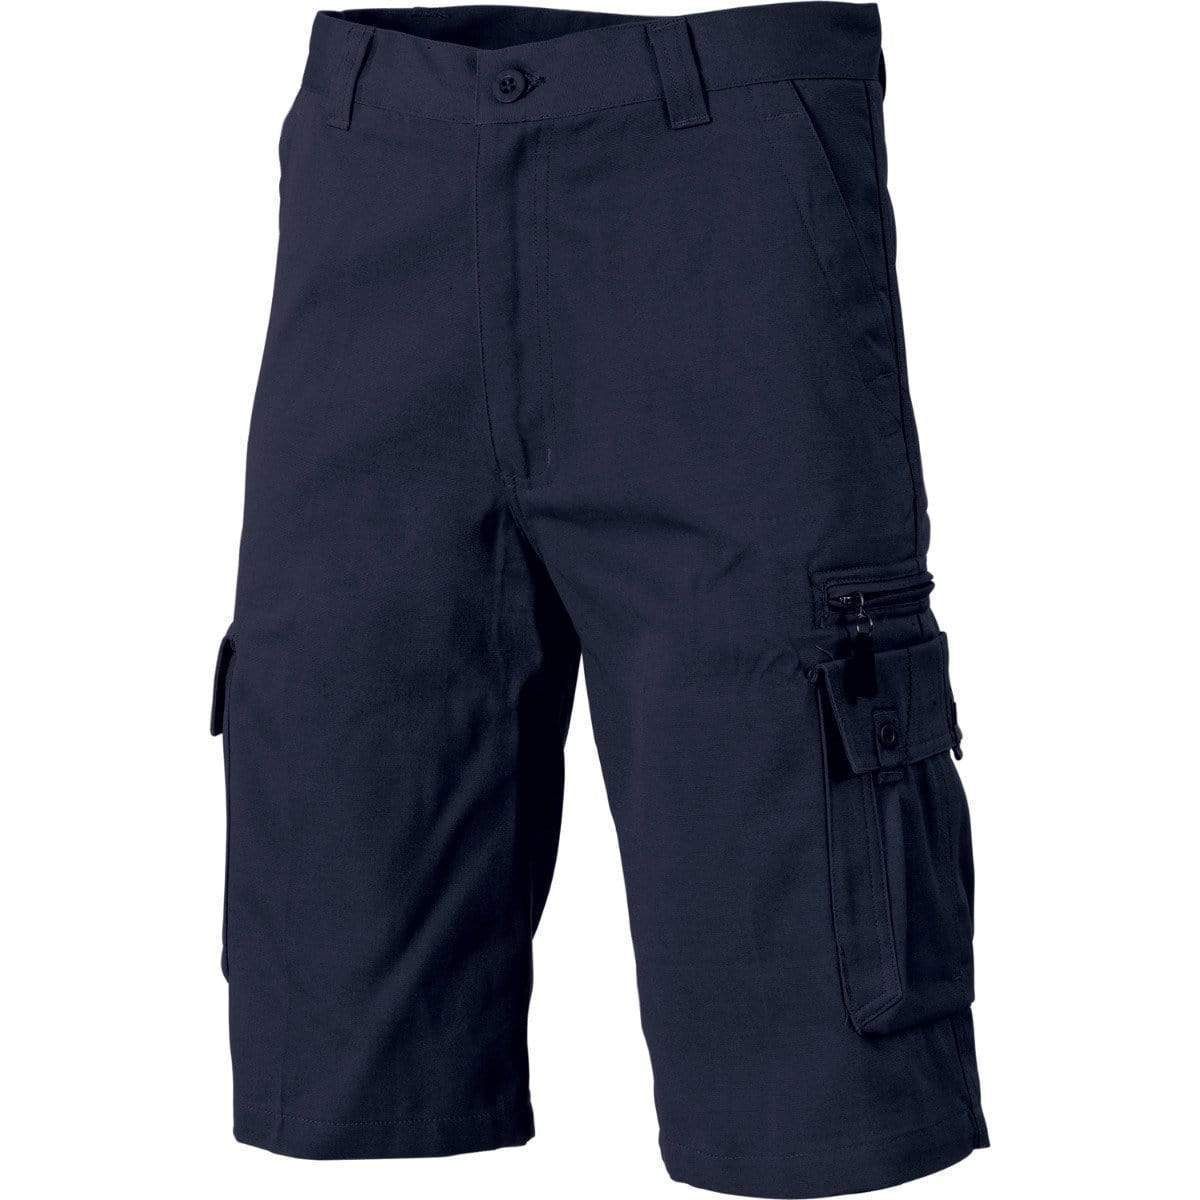 Dnc Workwear Island Duck Weave Cargo Shorts - 4533 Work Wear DNC Workwear Navy 77R 